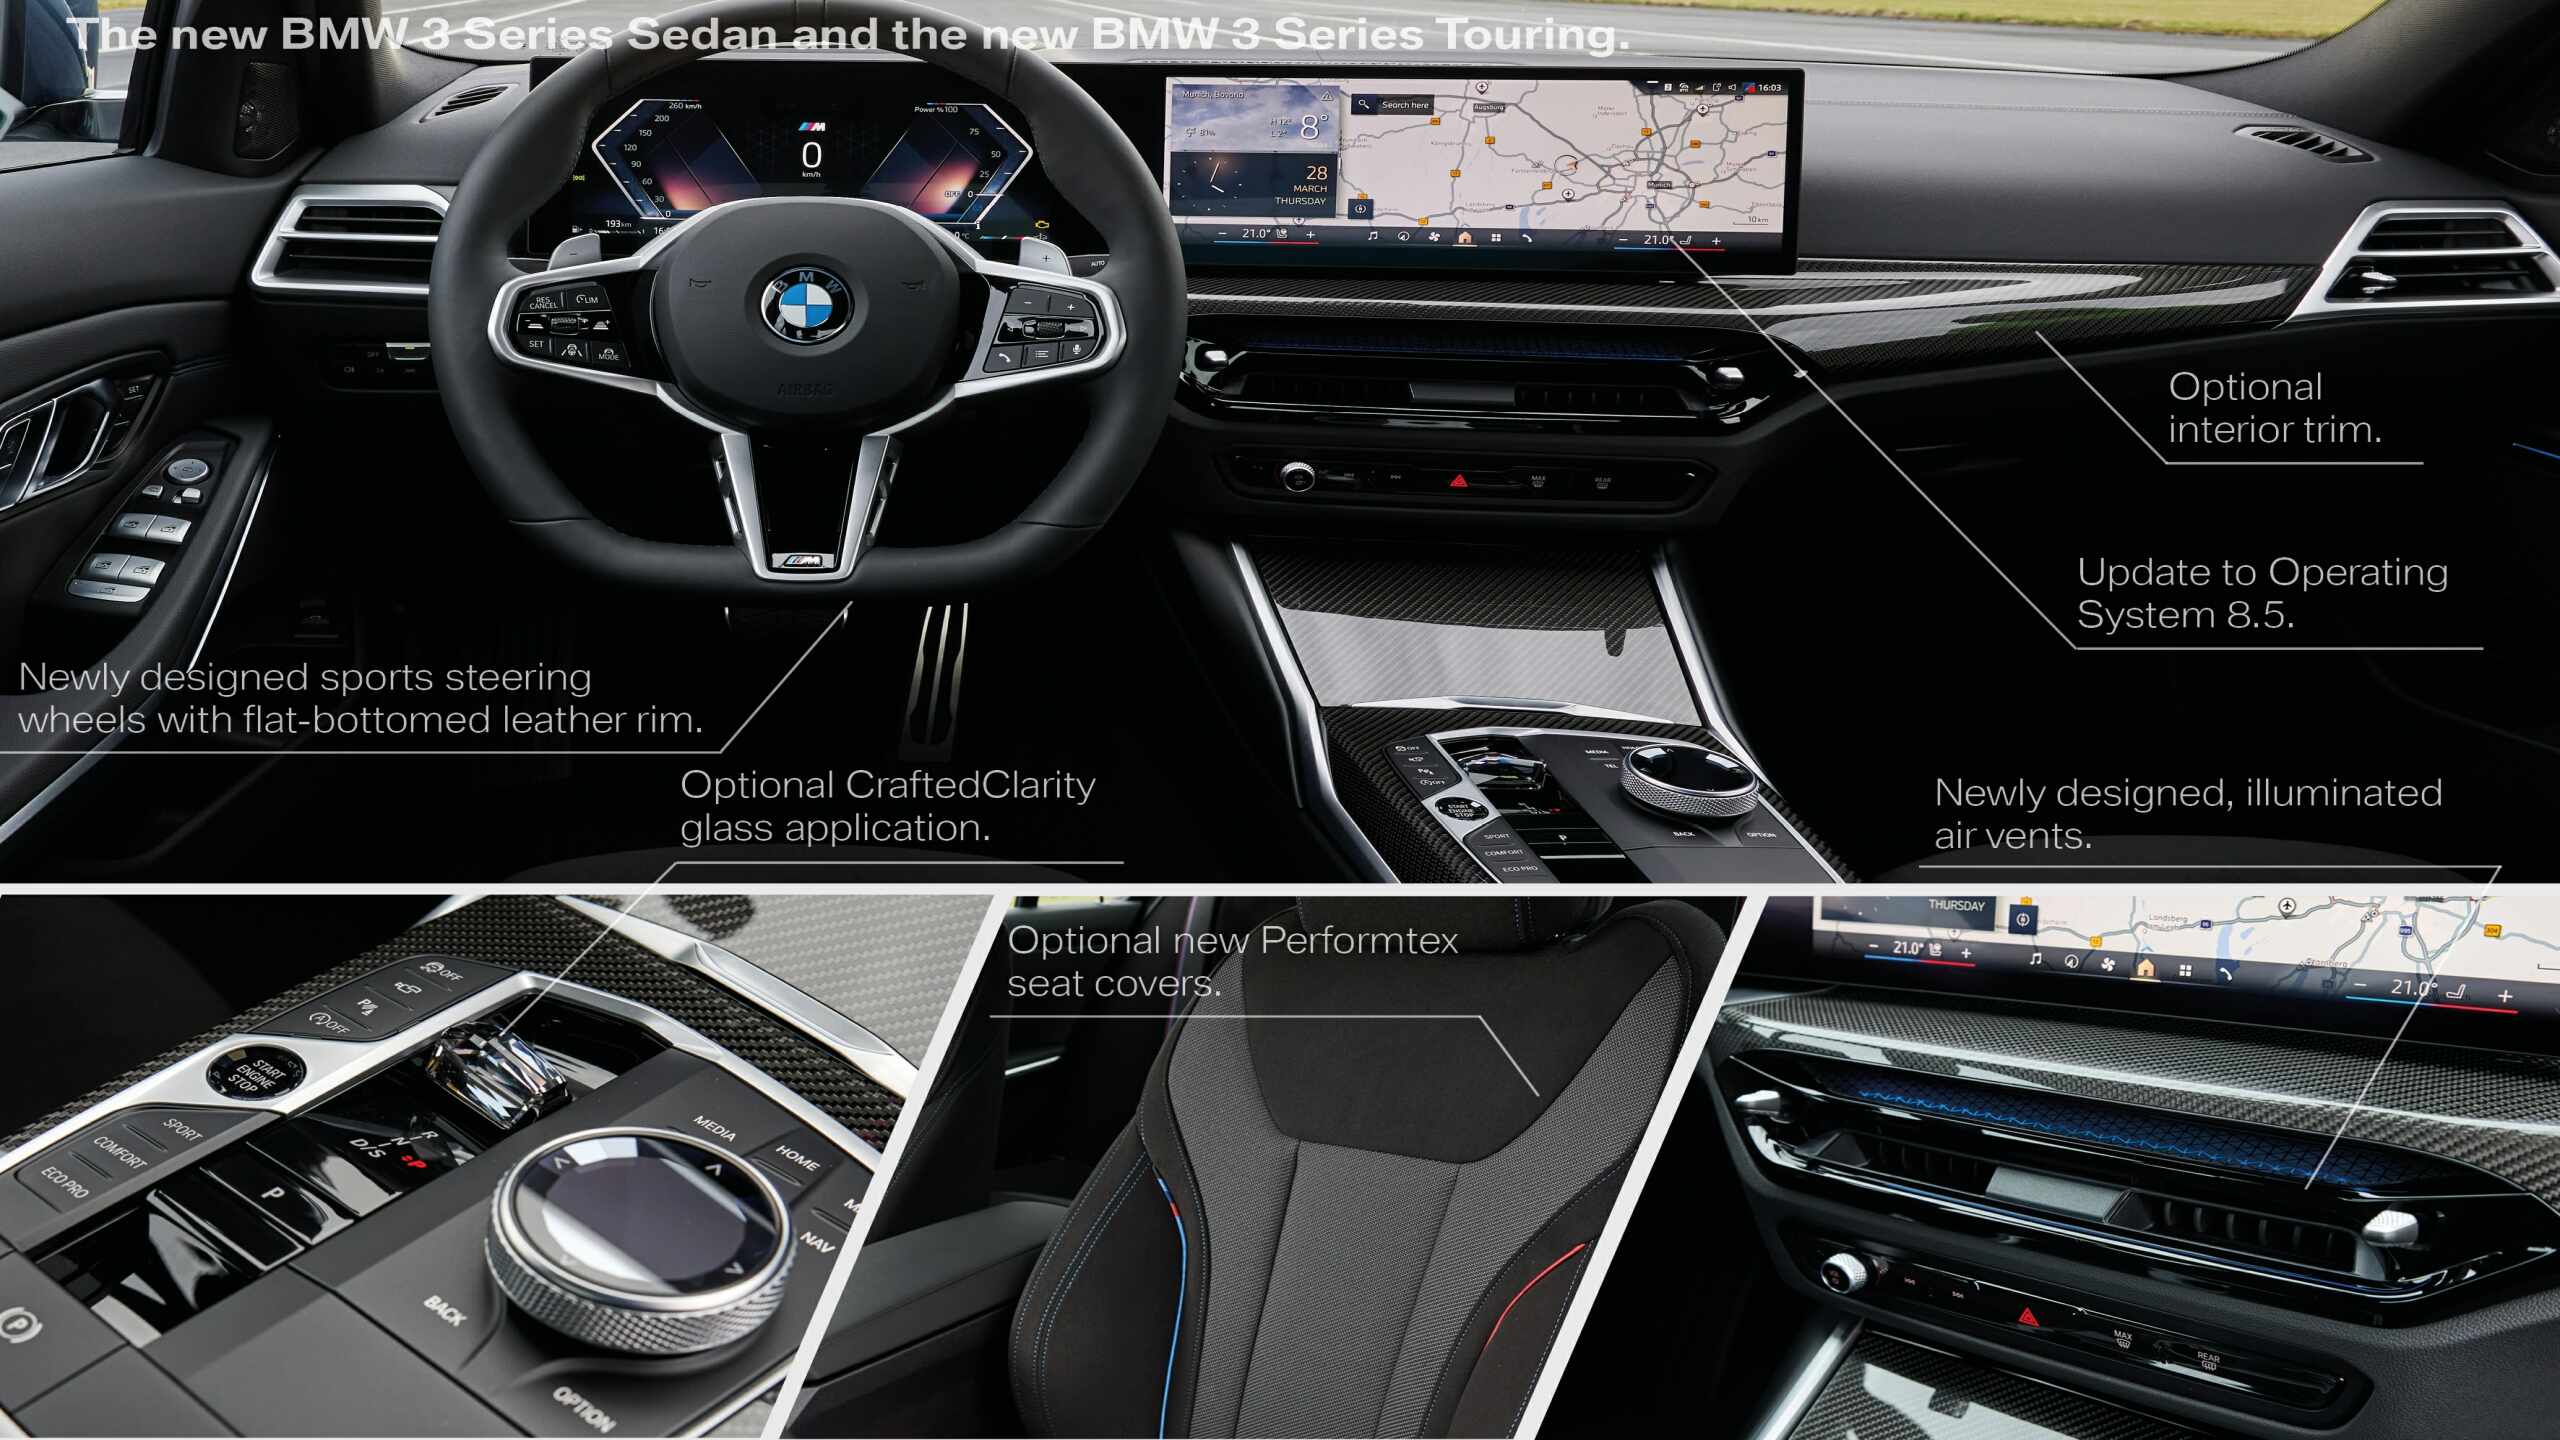 The Interior Highlights Of The New BMW 330i Sedan (BMW)